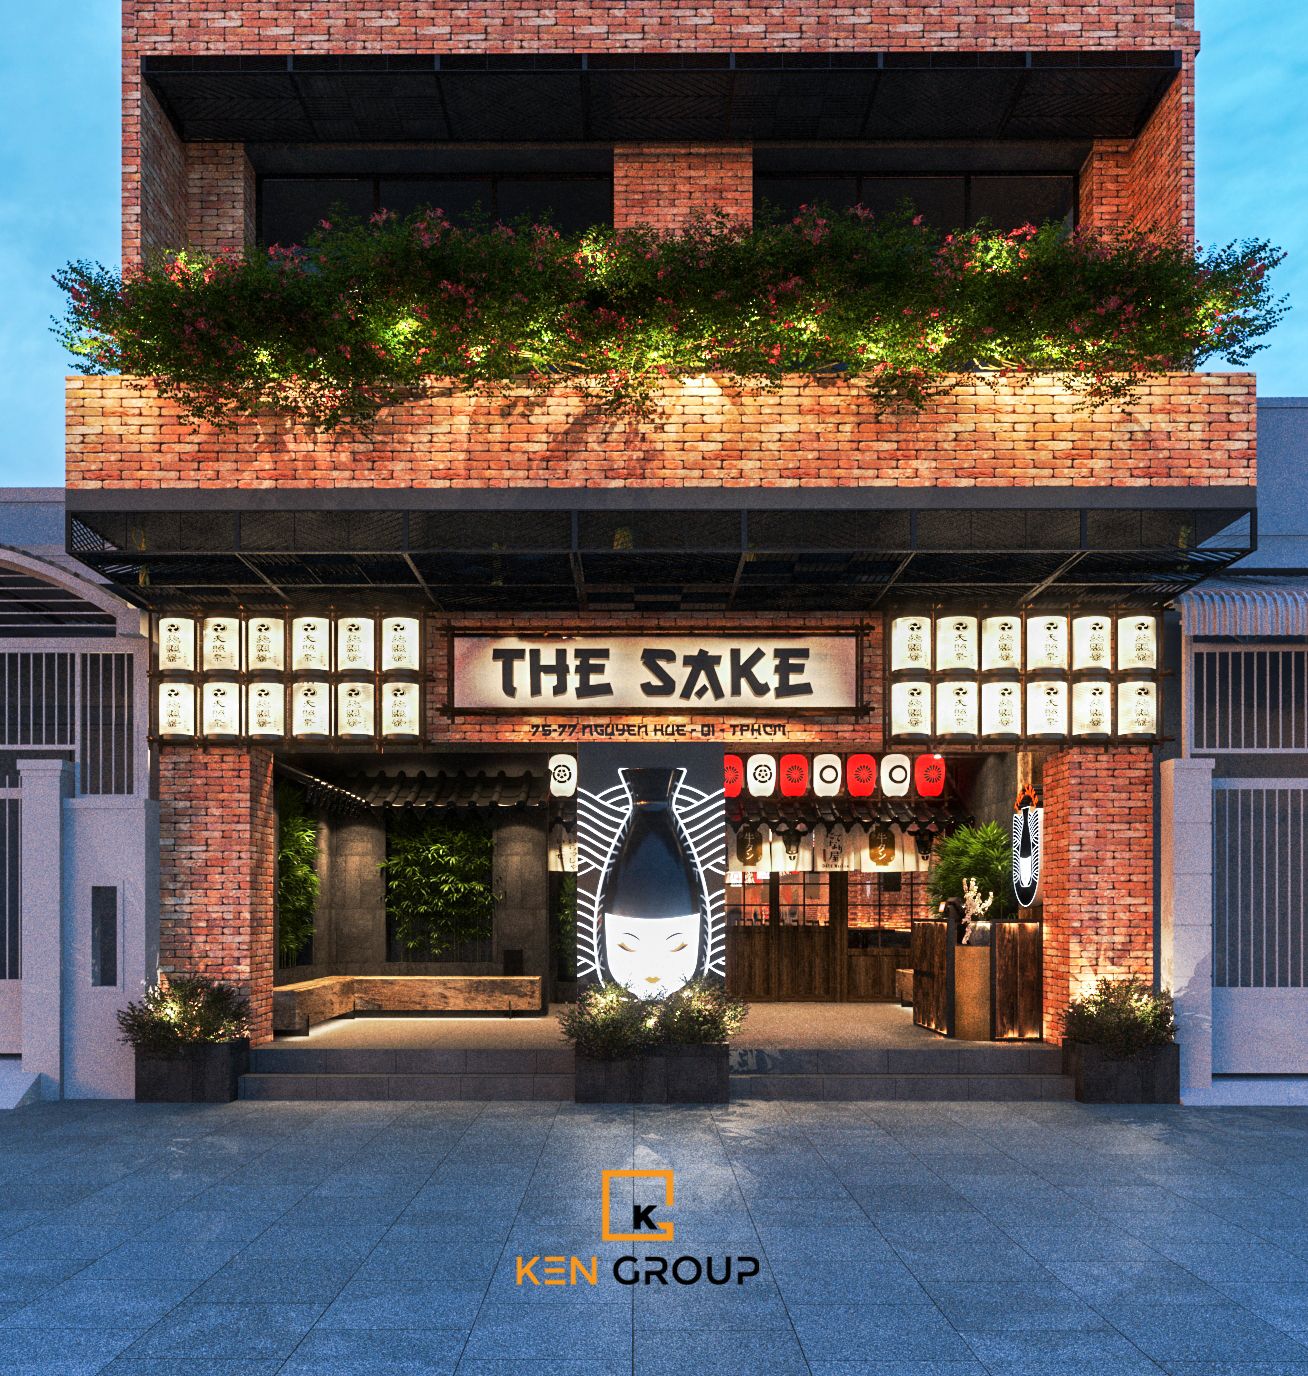 Designing The Sake Restaurant - A Slice of Japan in the Heart of Saigon